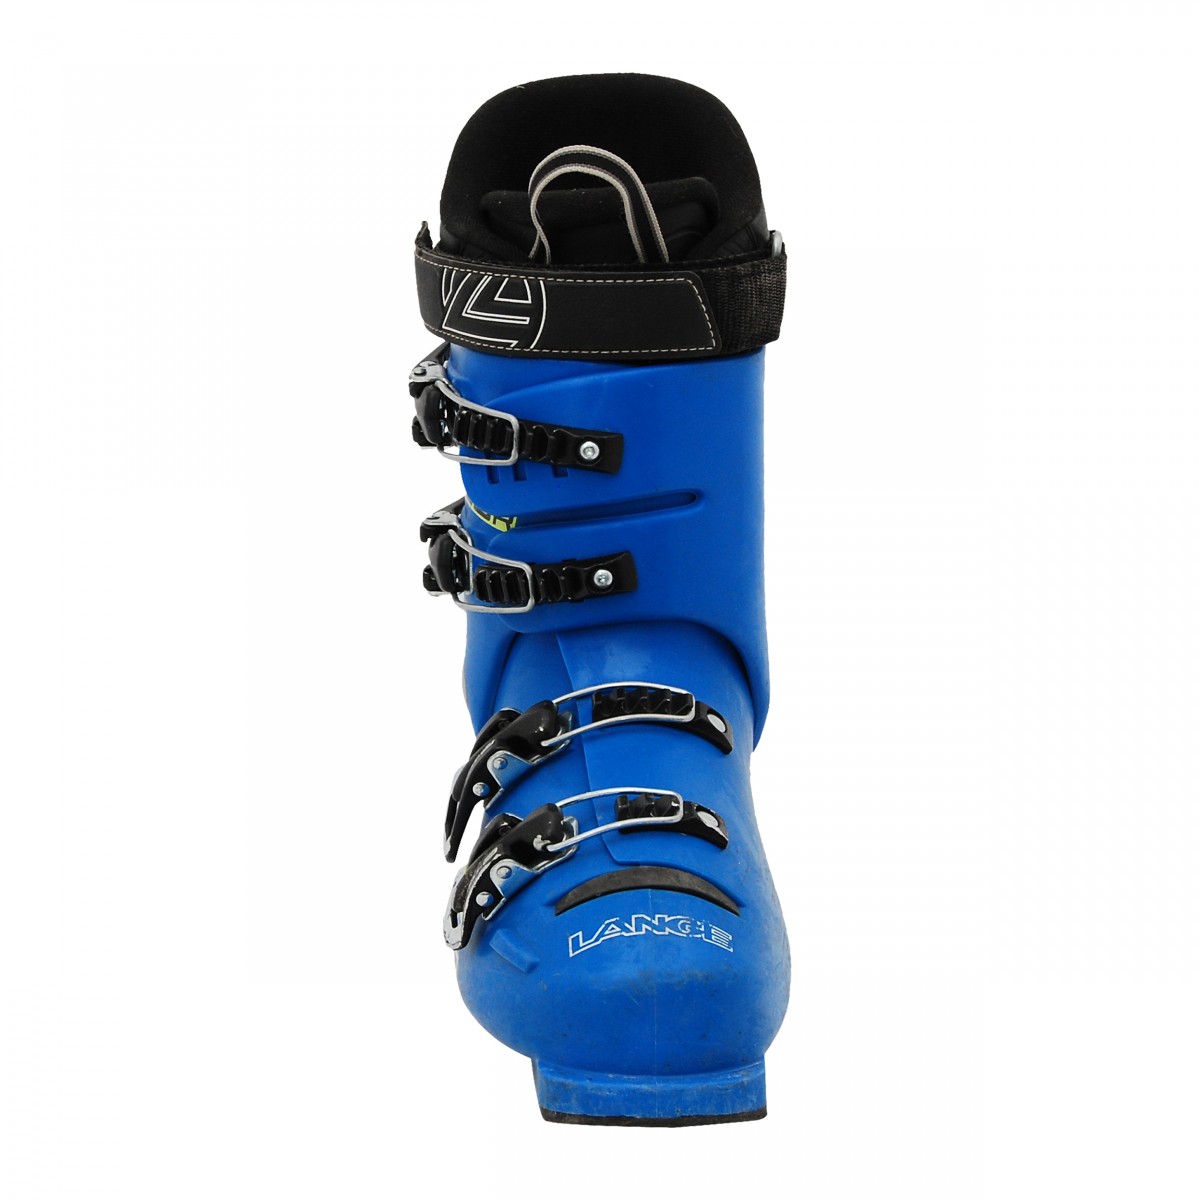 Garçon Chaussures De Ski Rsj 60 Enfant Bleu Bleu Lange